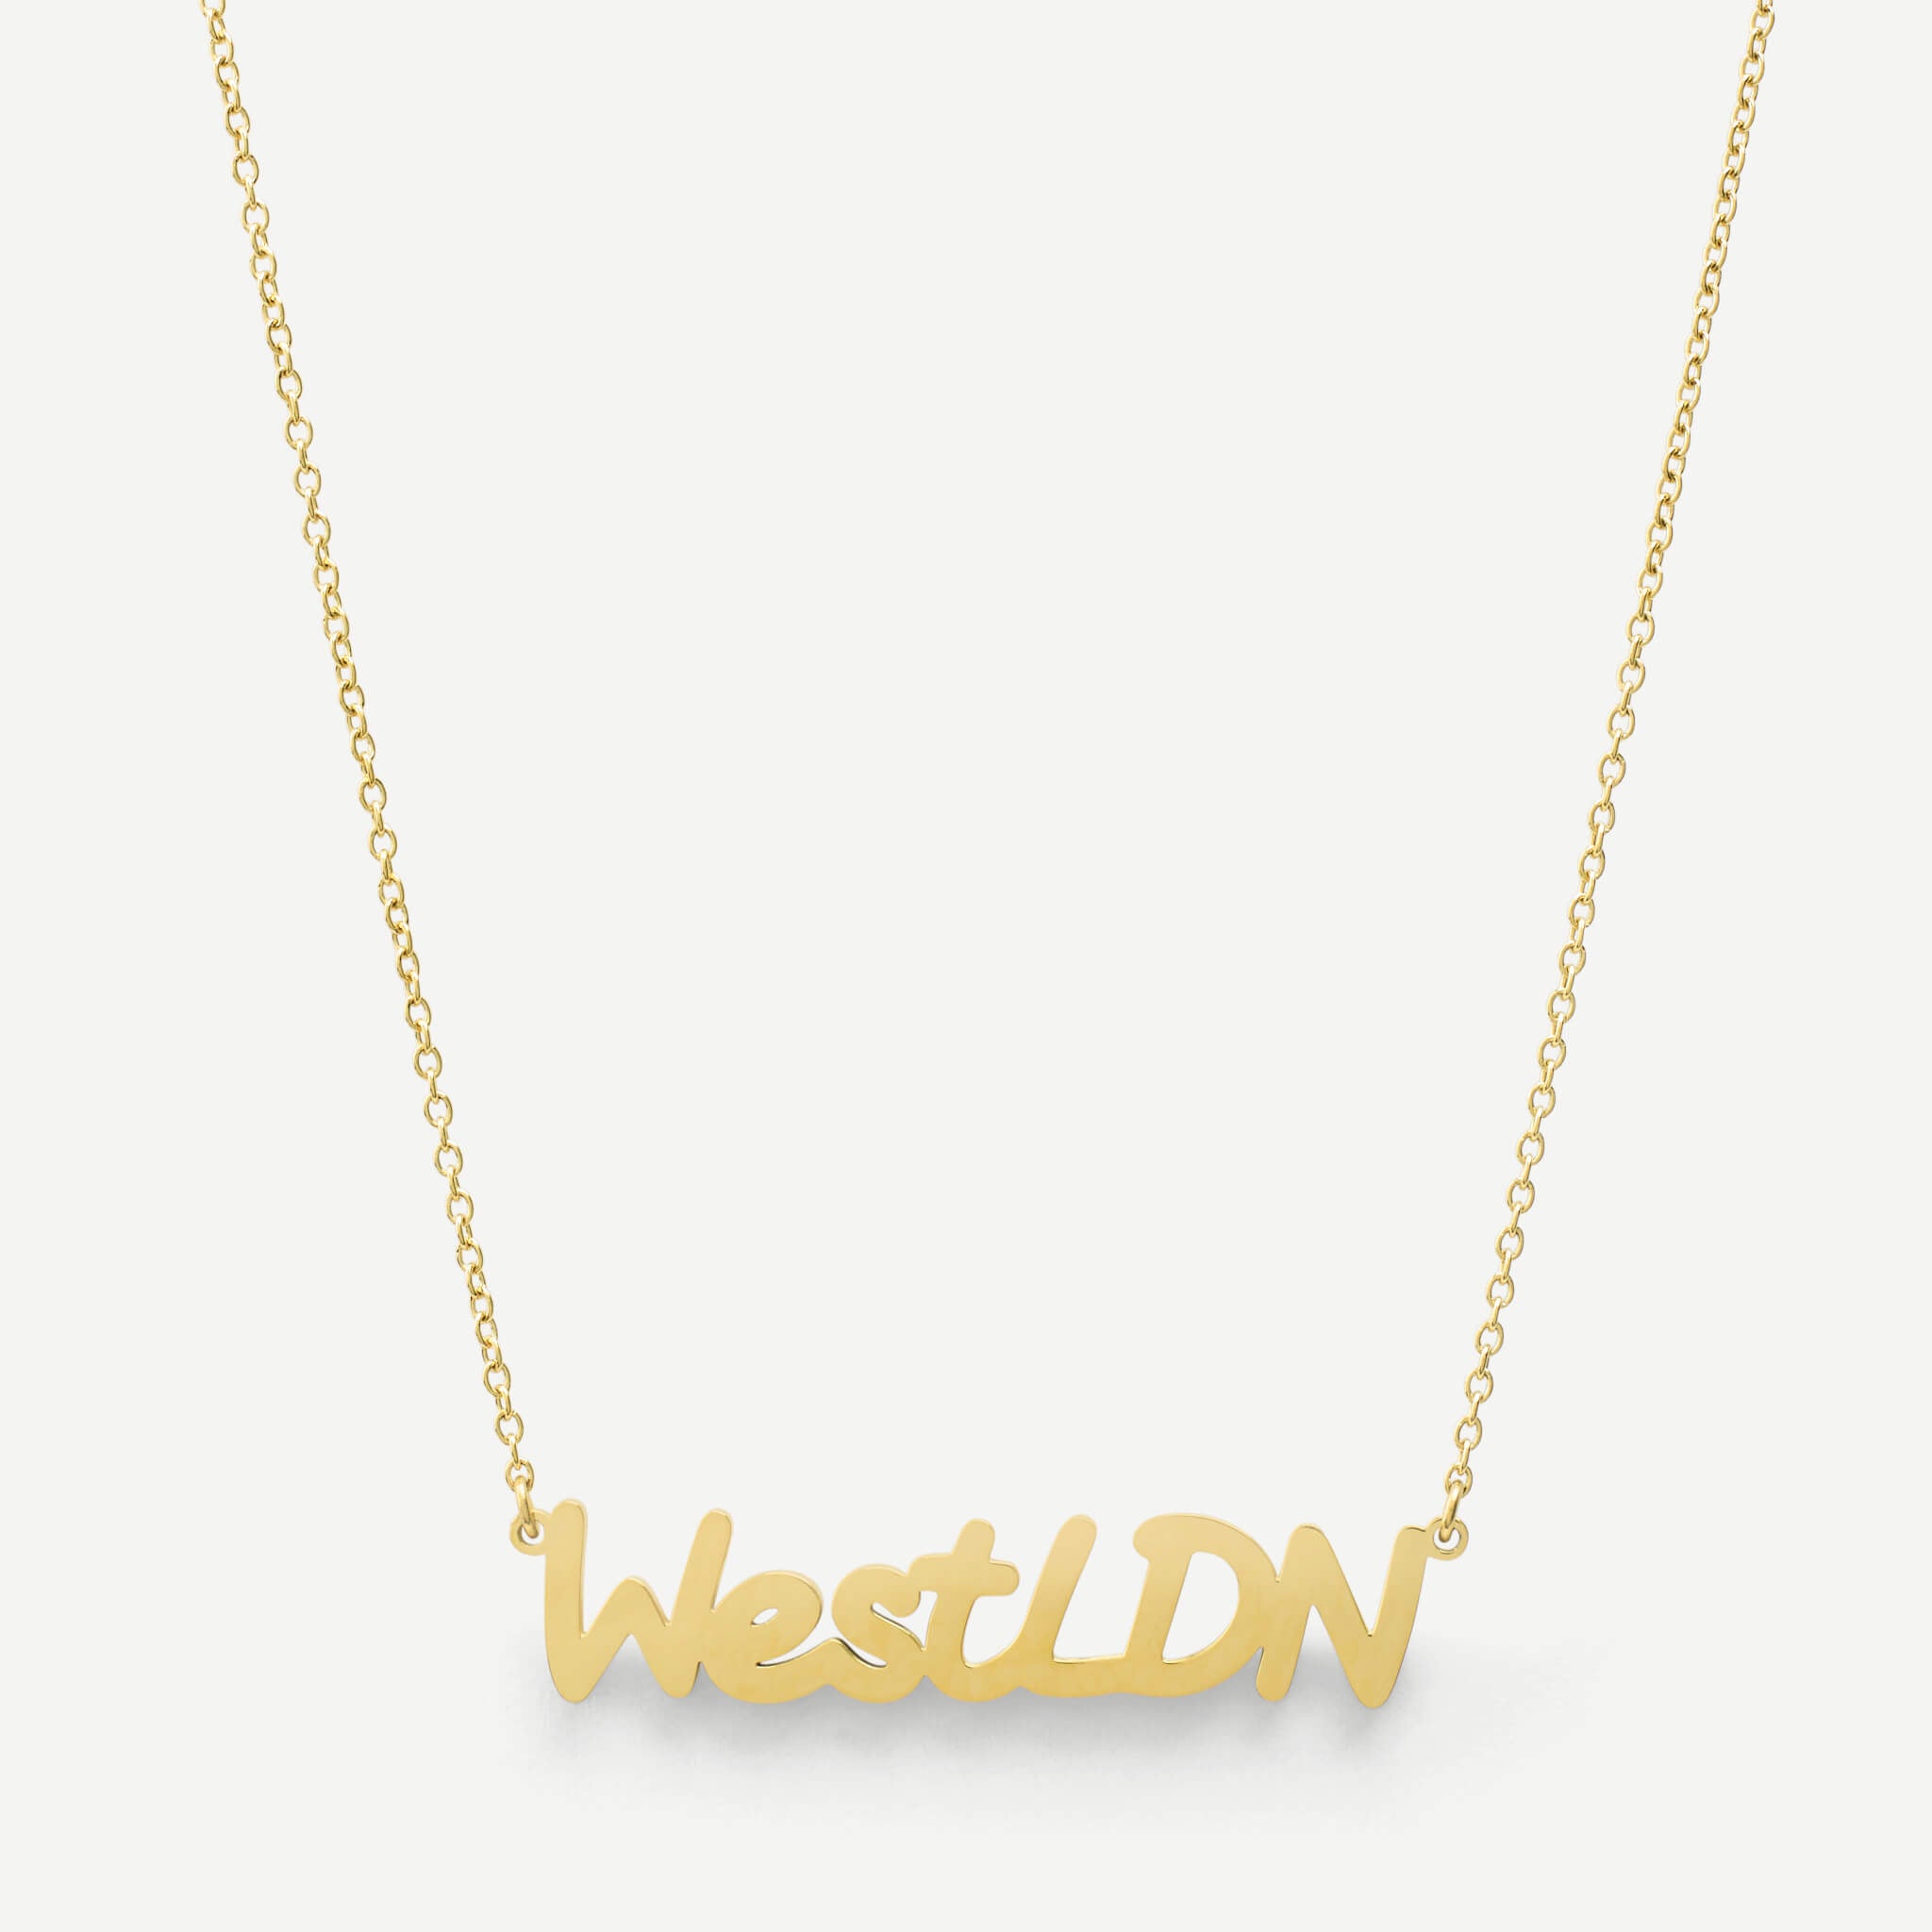 West LDN Chain